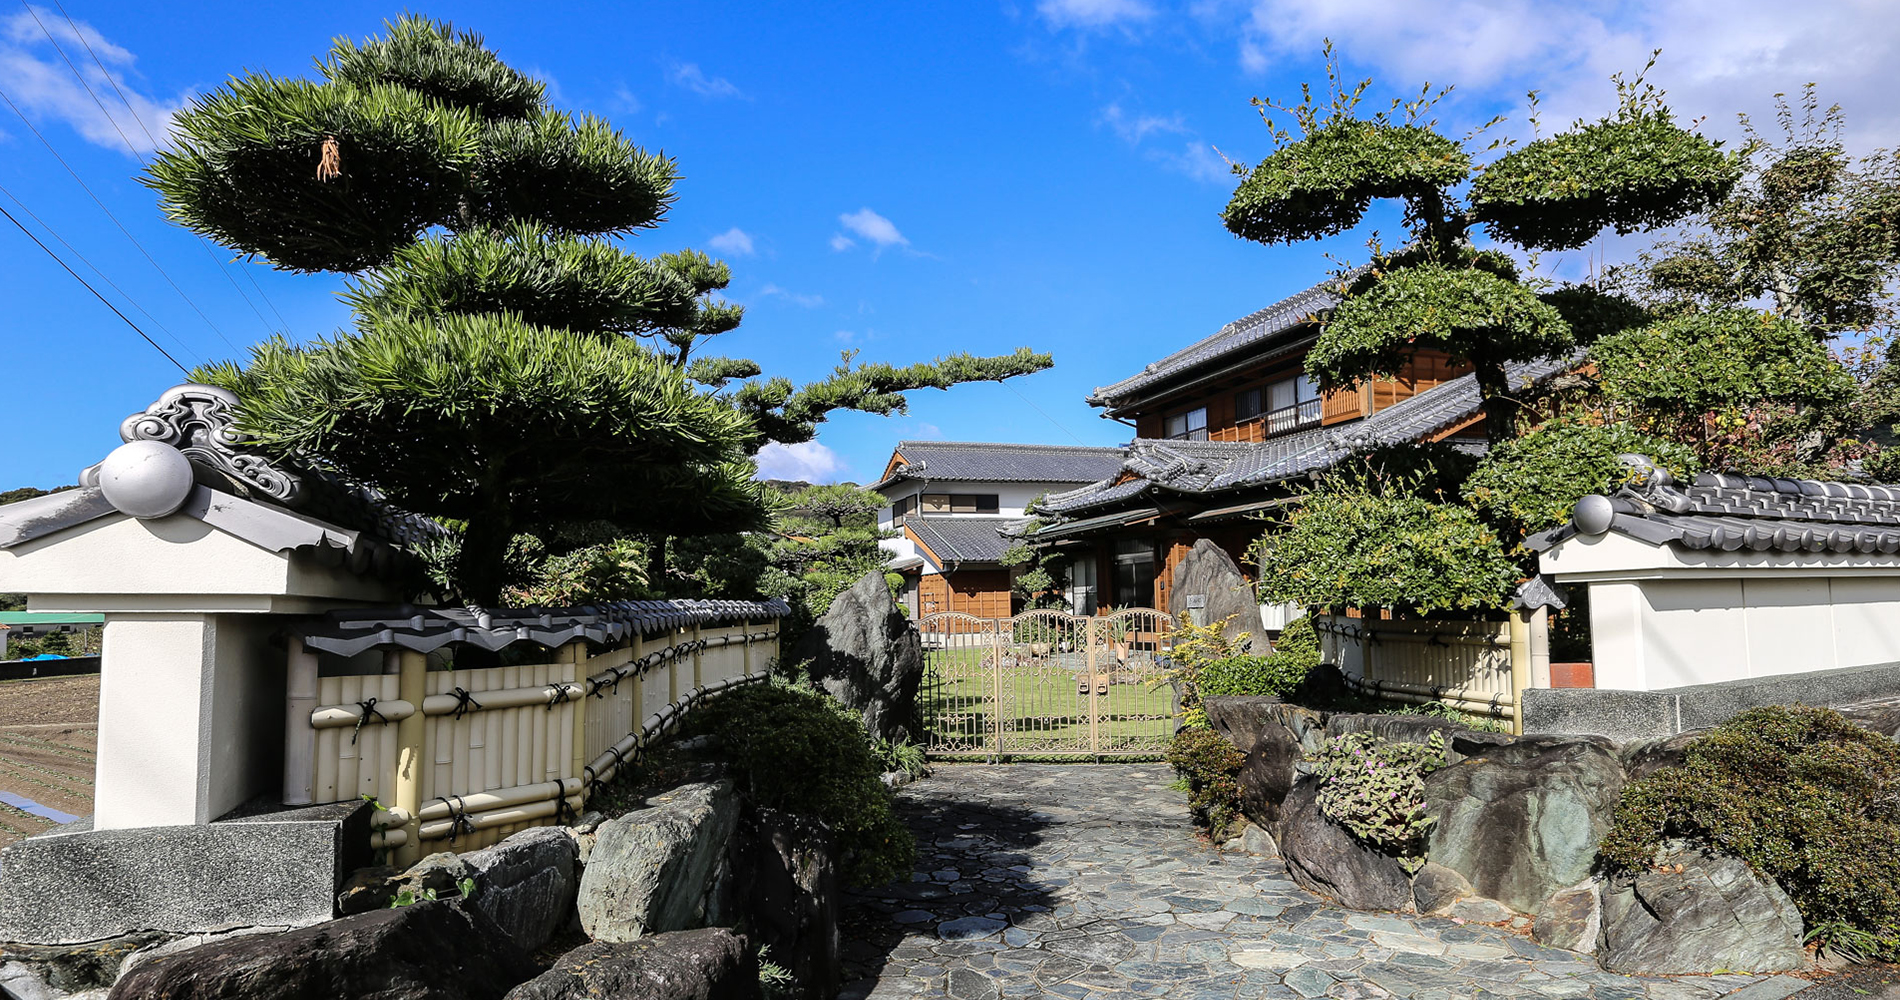 Entre Ryozenji et Gokarukuji, une belle maison traditionnelle